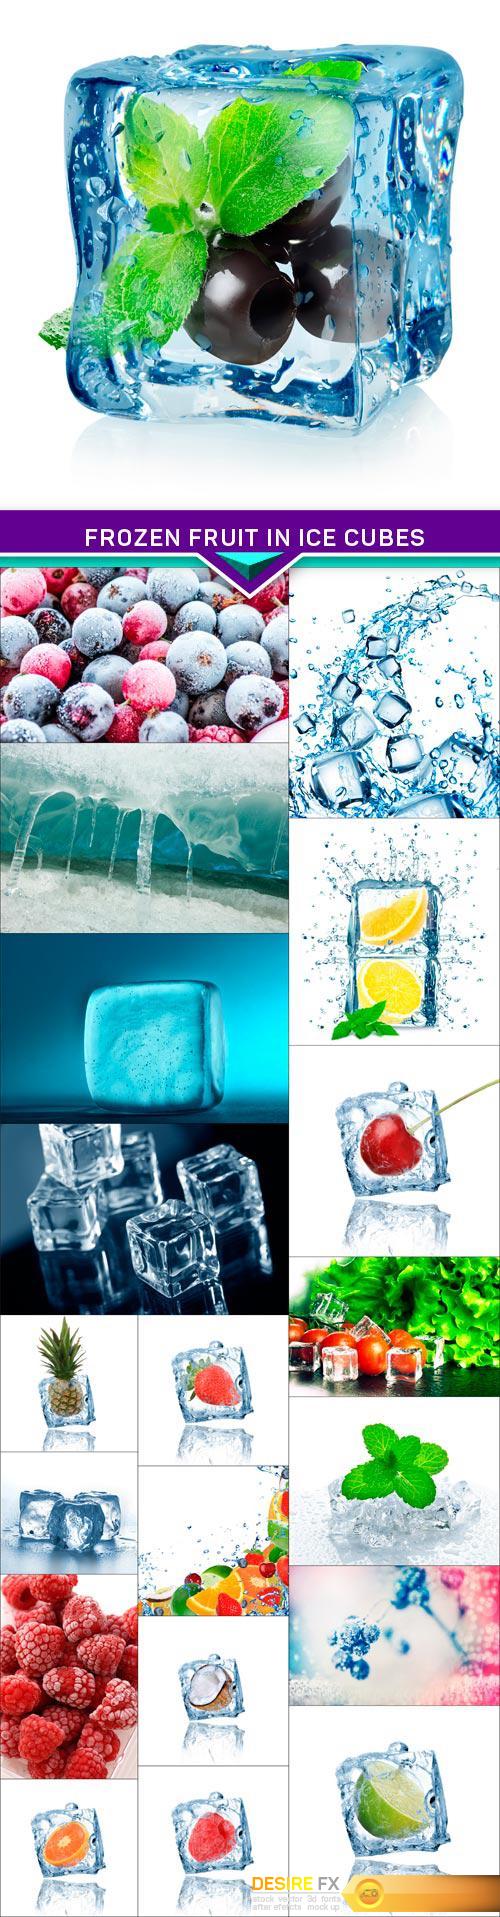 Frozen fruit in ice cubes 20X JPEG